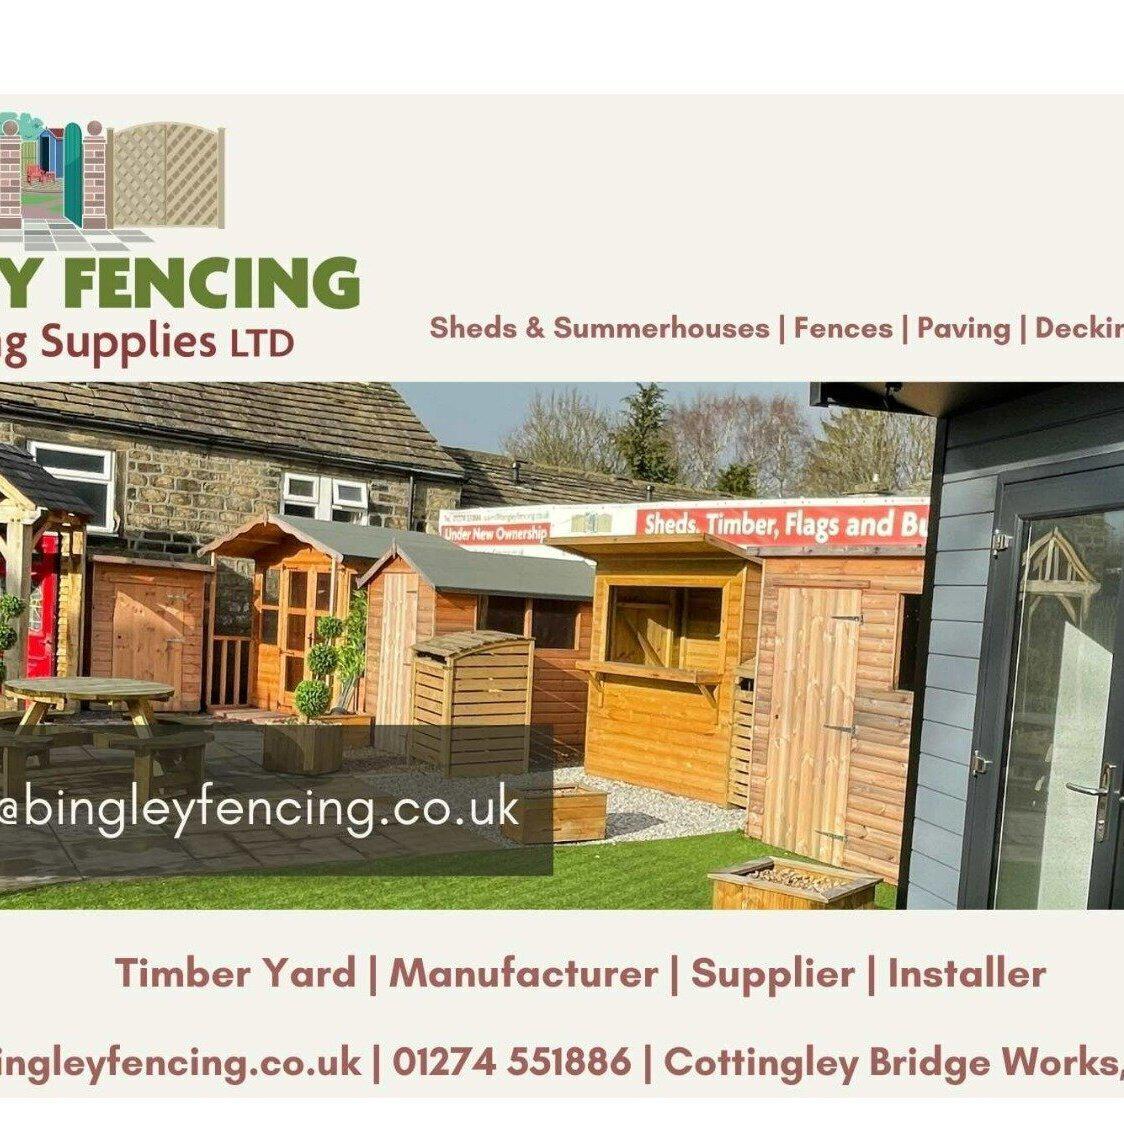 Images Bingley Fencing & Building SuppliesLtd